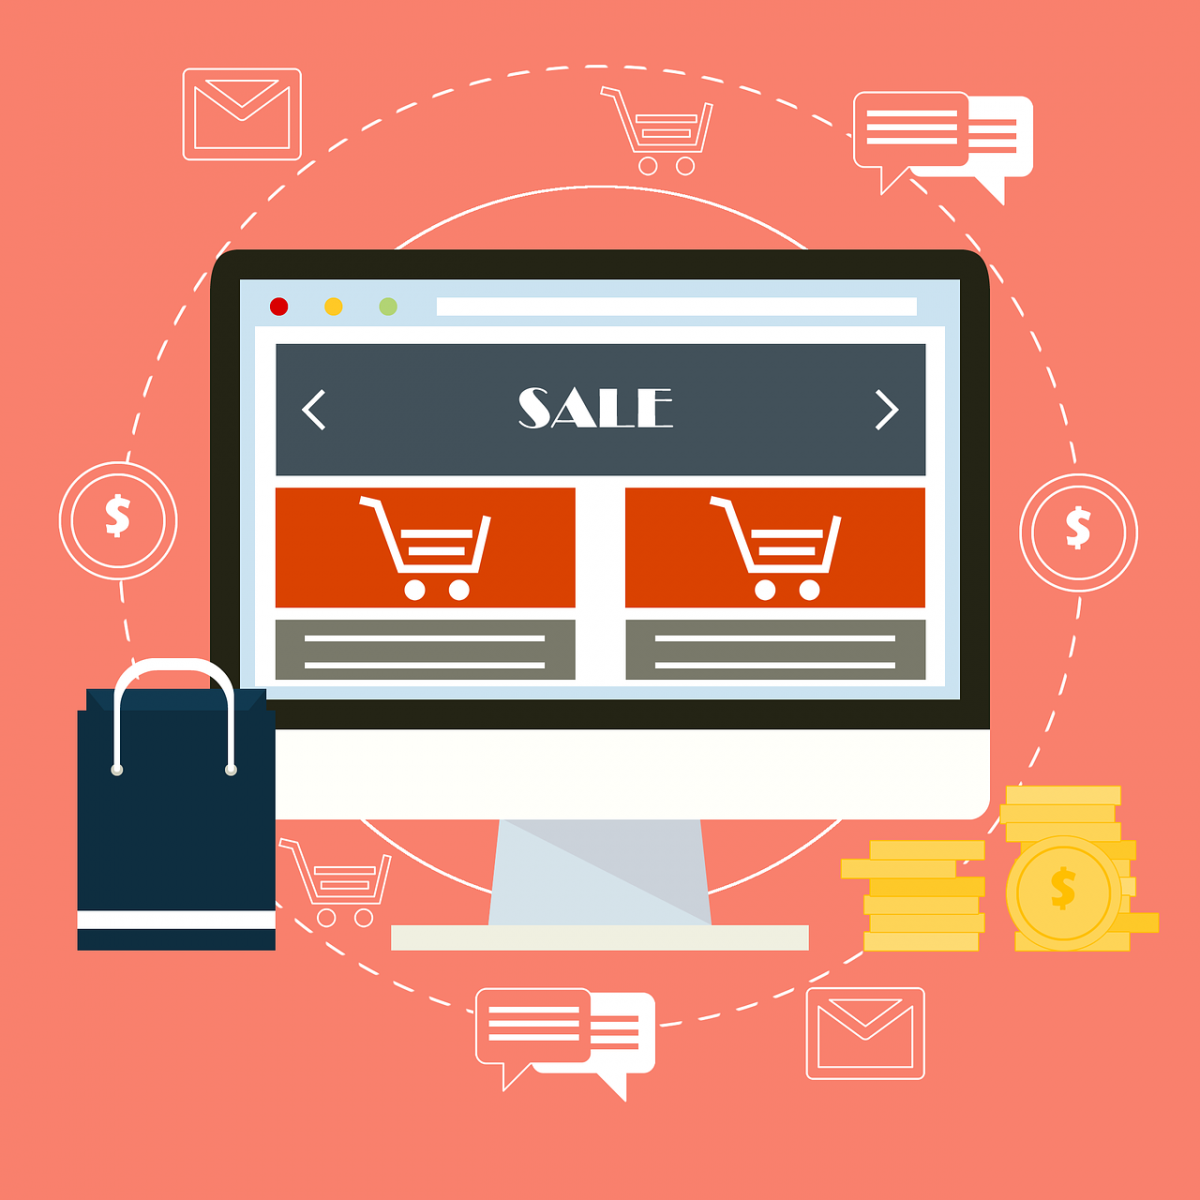 eCommerce website sales page concept